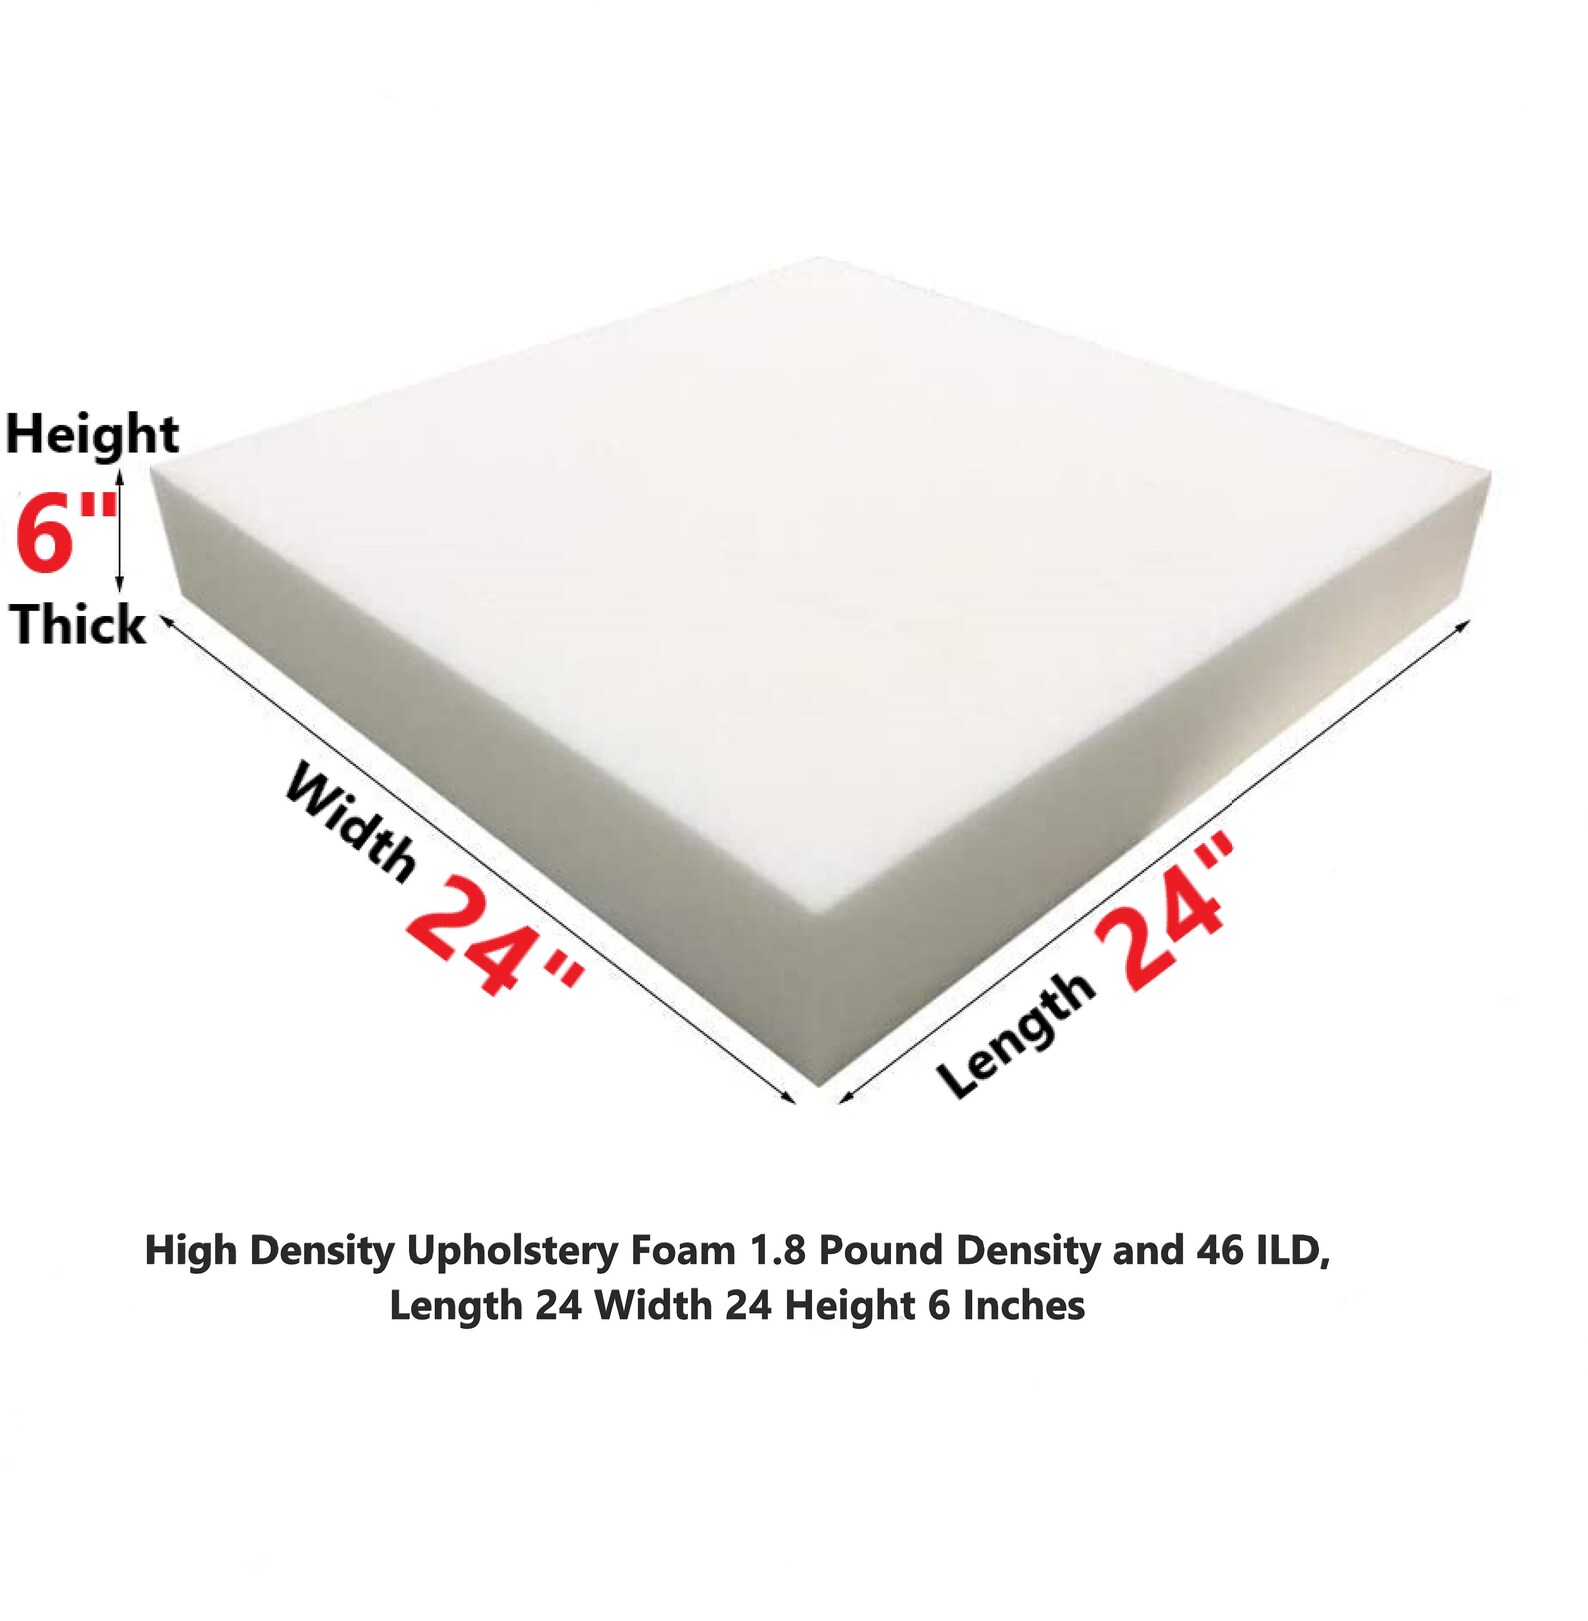 High Density Upholstery Foam 1.8 Pound Density and 46 ILD | Etsy